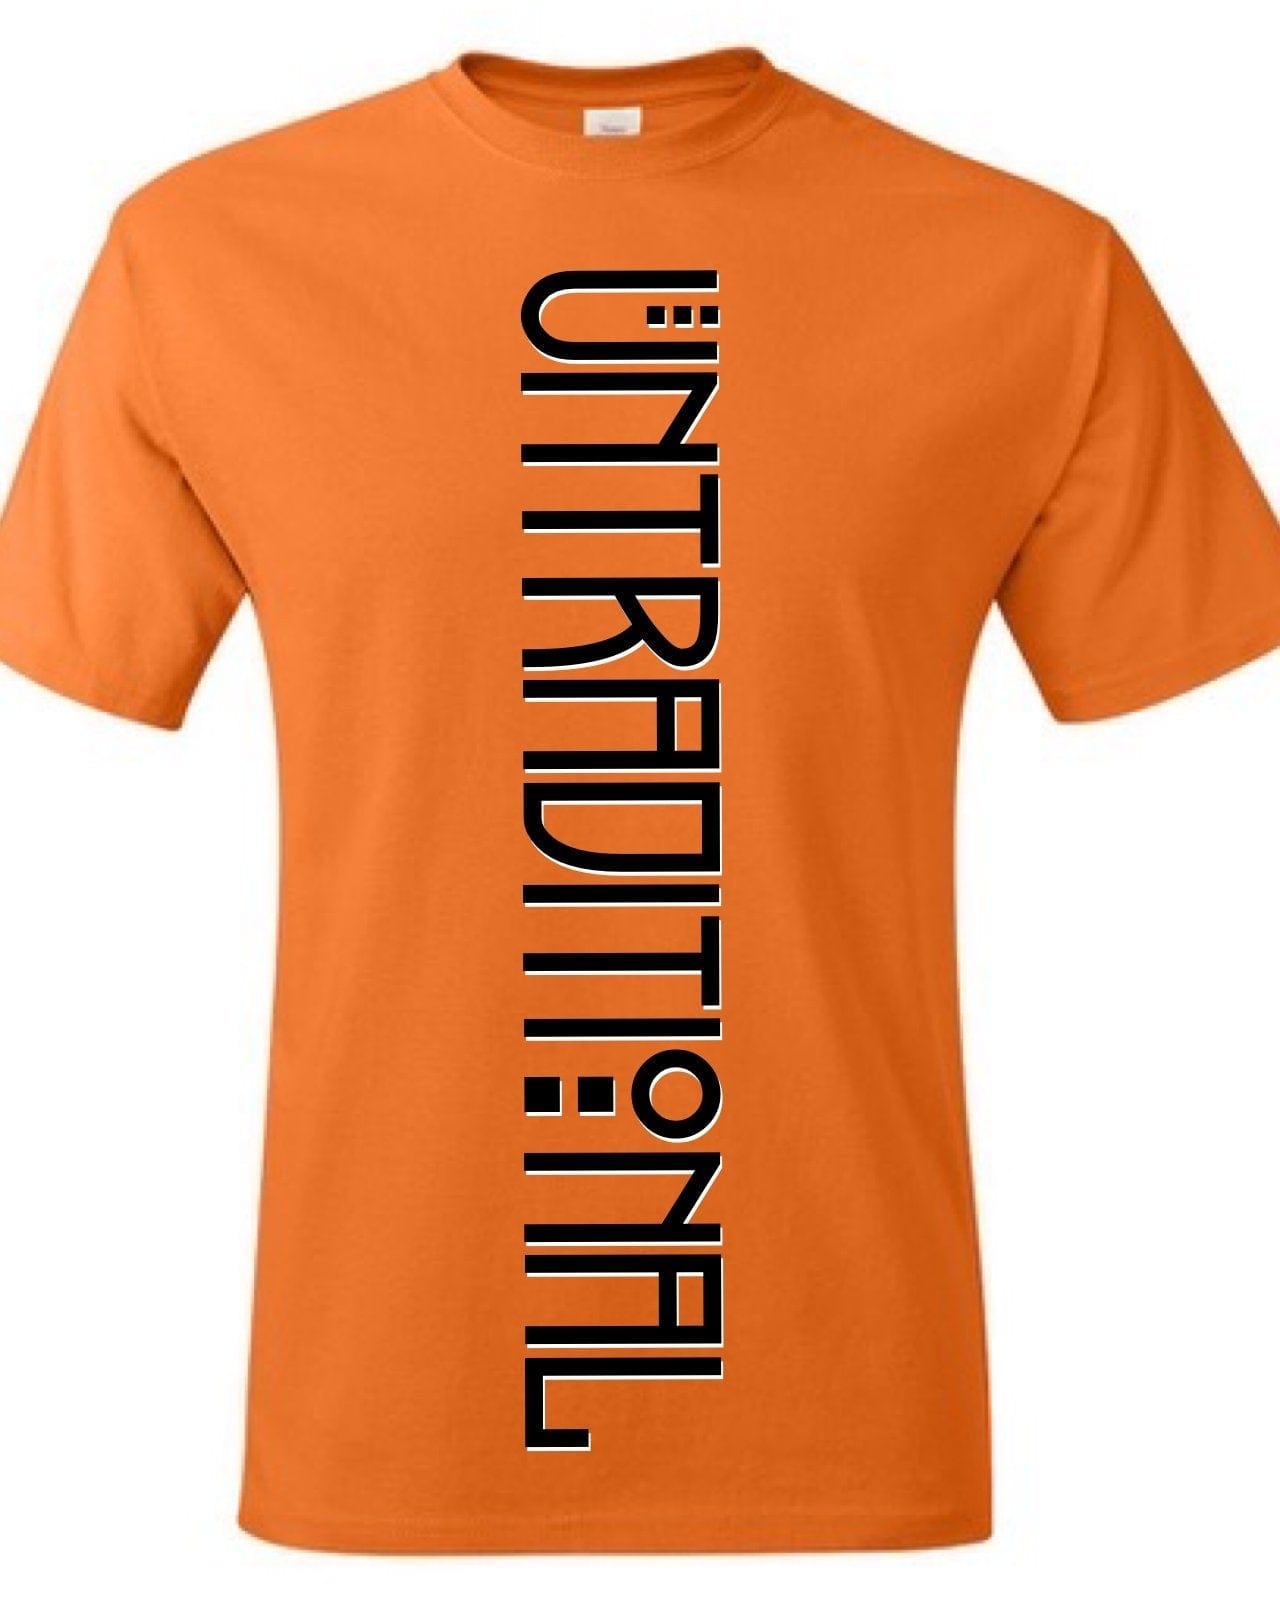 InsensitiviTees Shirts S / Orange Untraditional